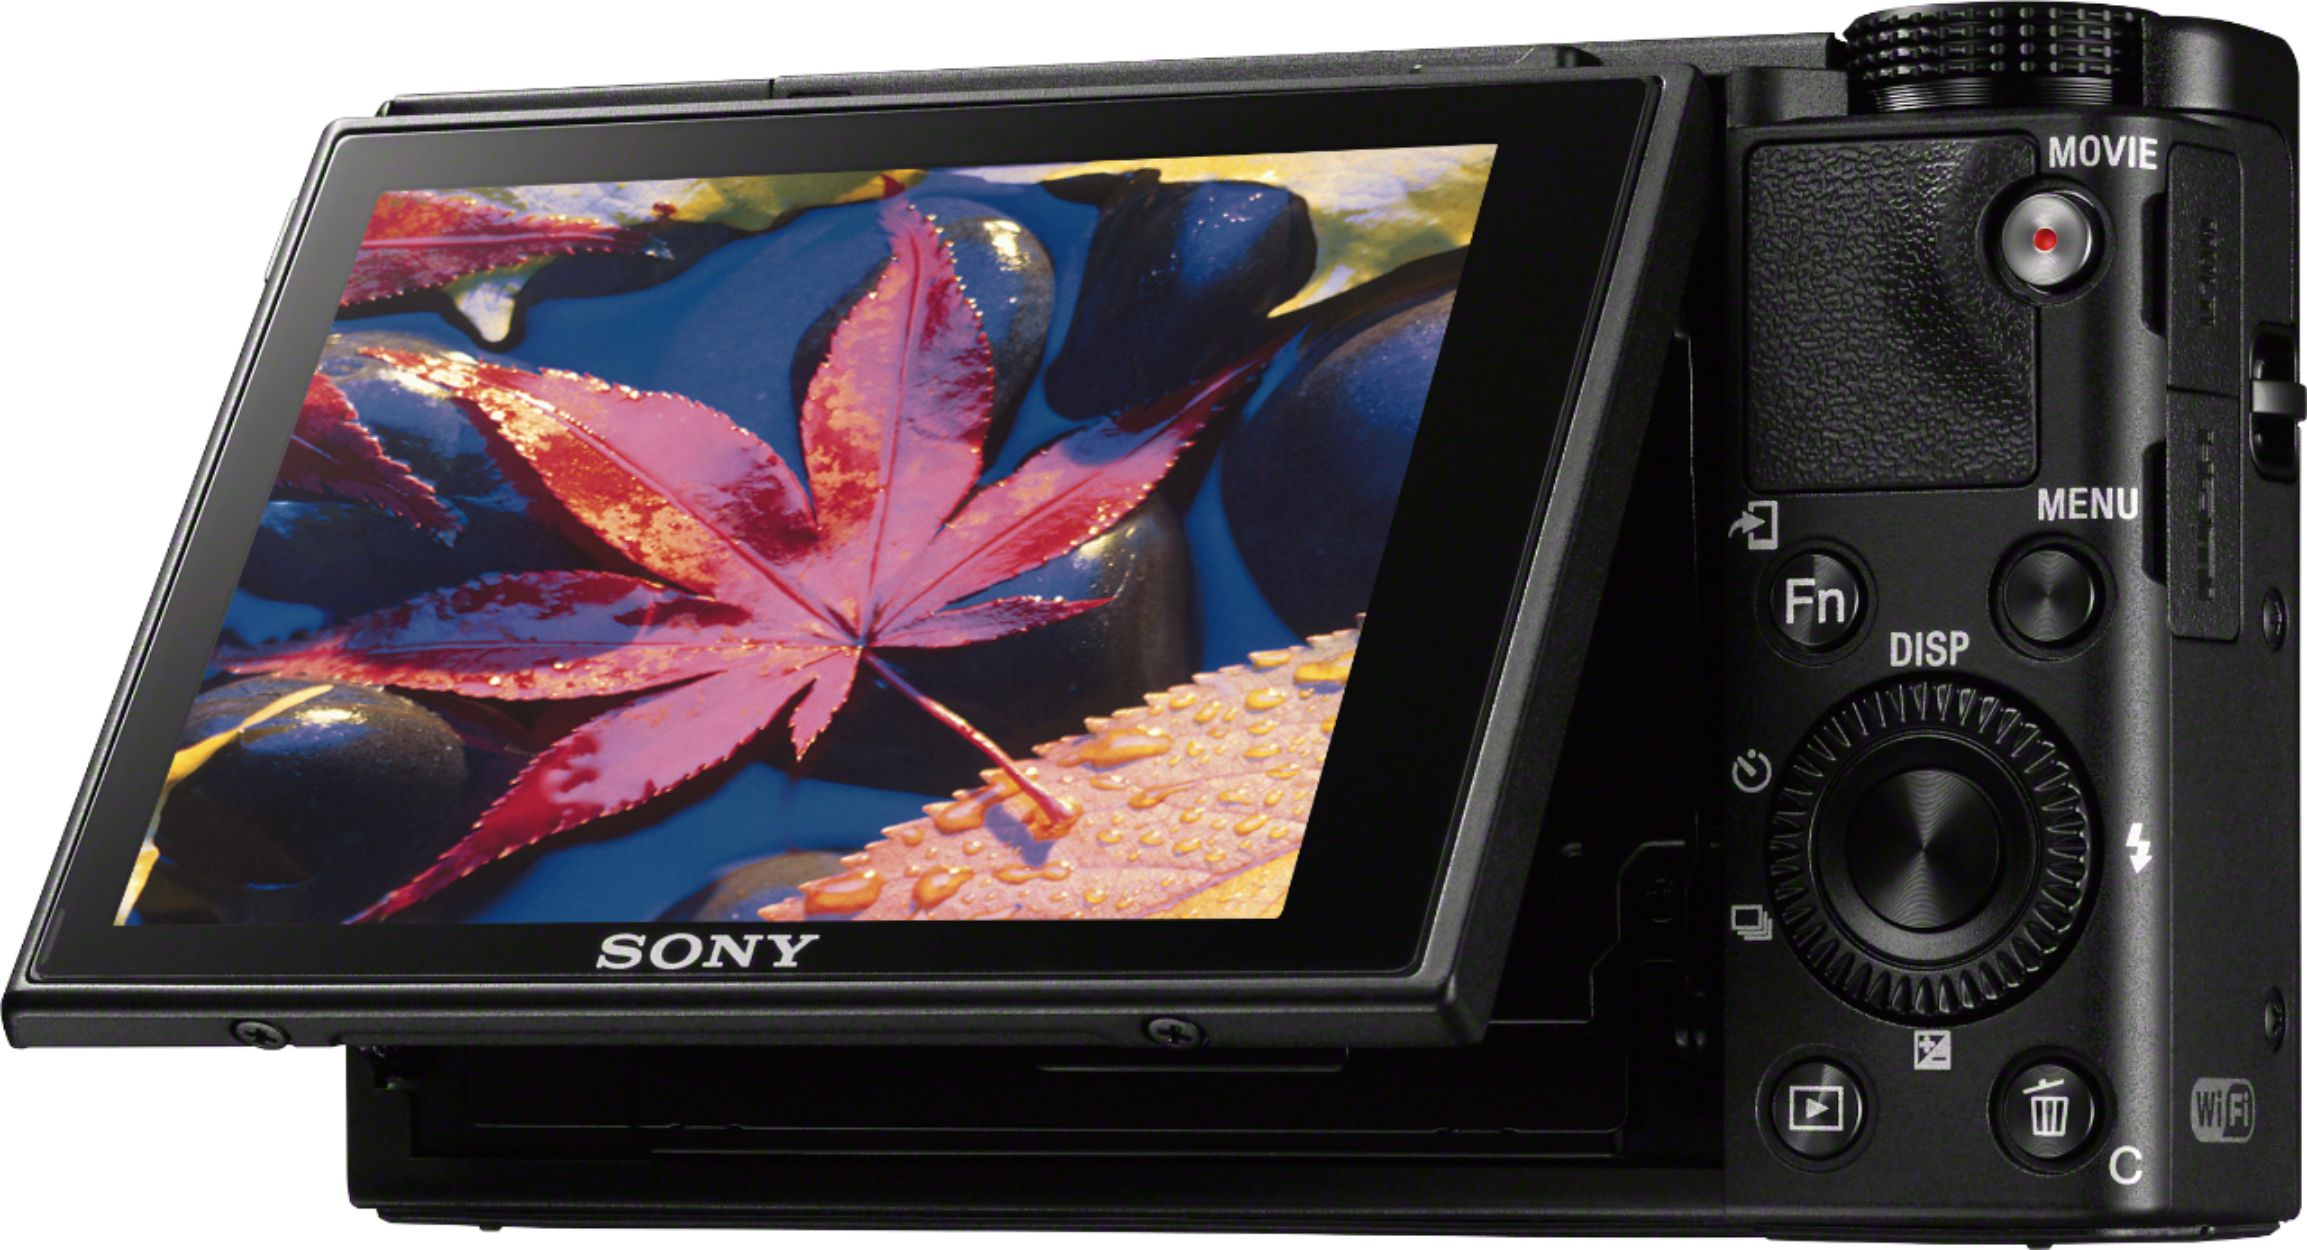 Sony Cyber-shot DSC-RX100 V 20.1-Megapixel Digital Camera Black